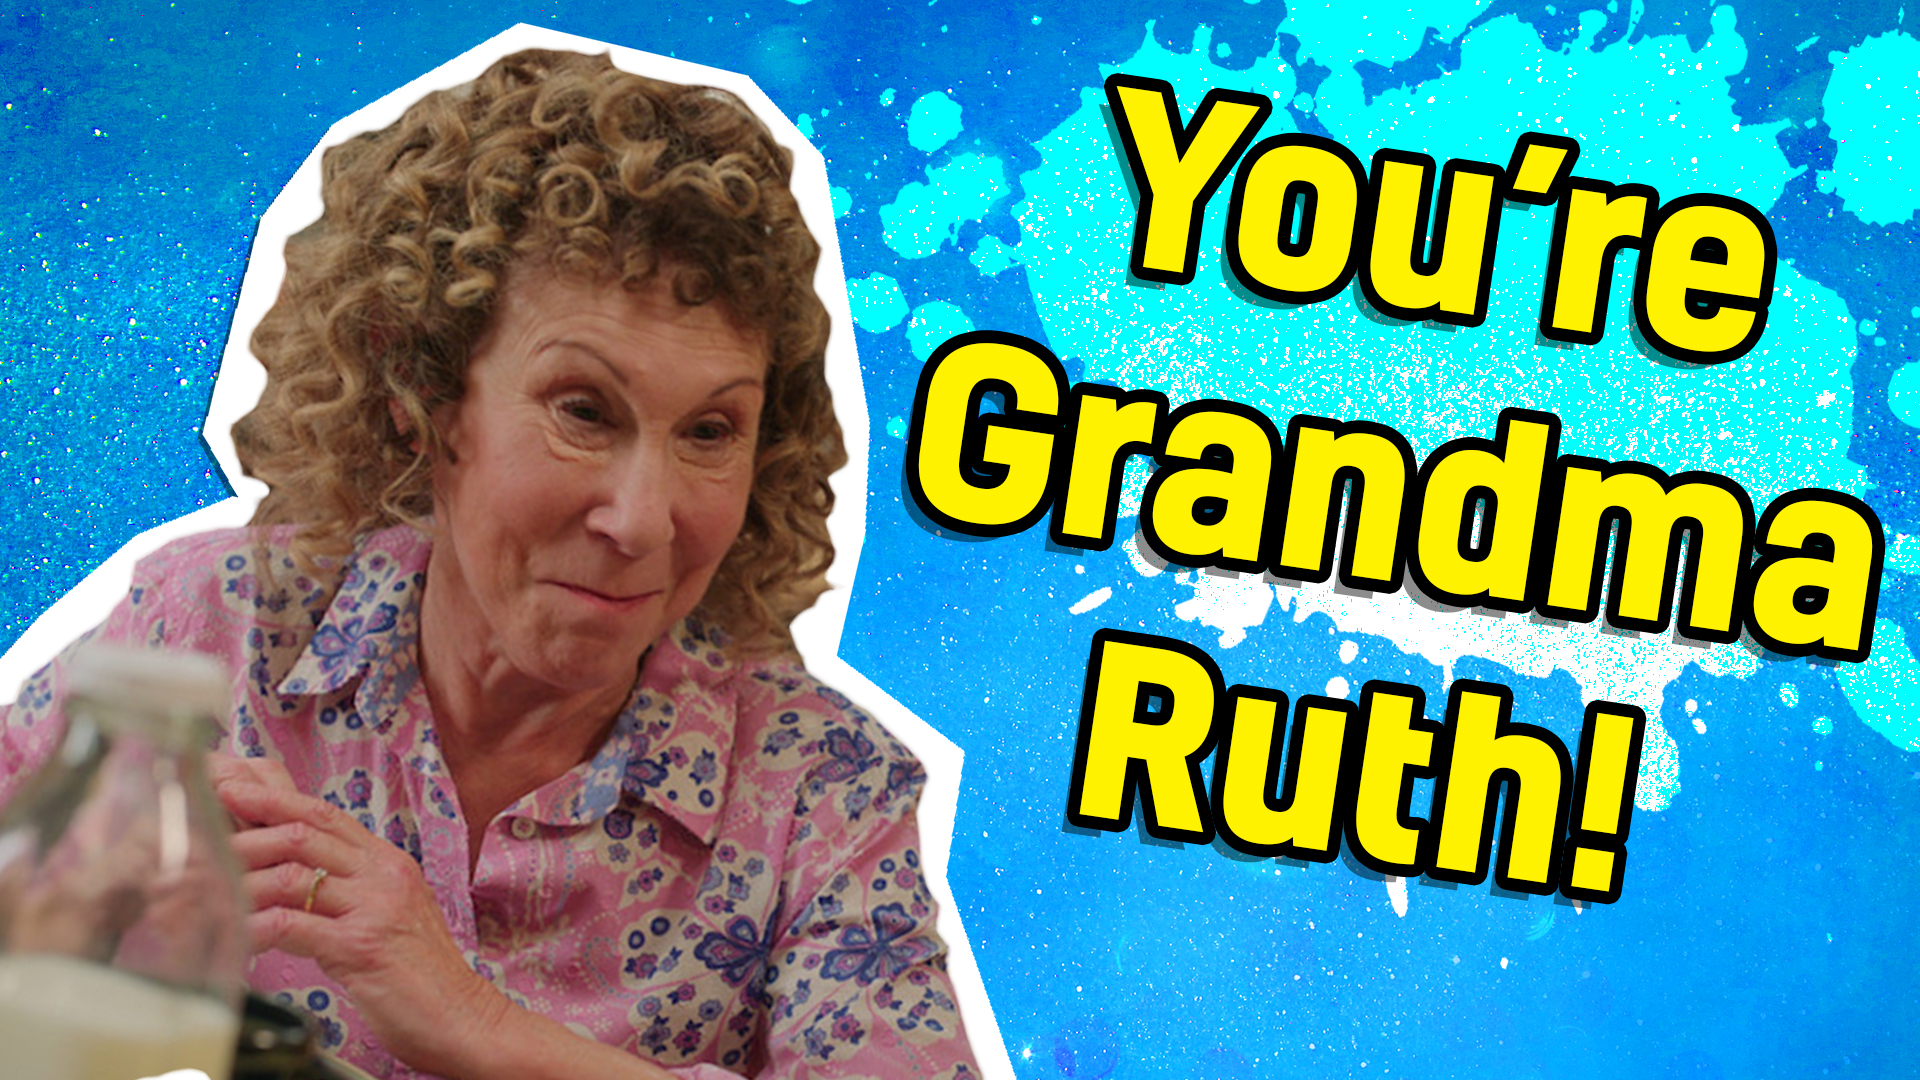 Result: Grandma Ruth